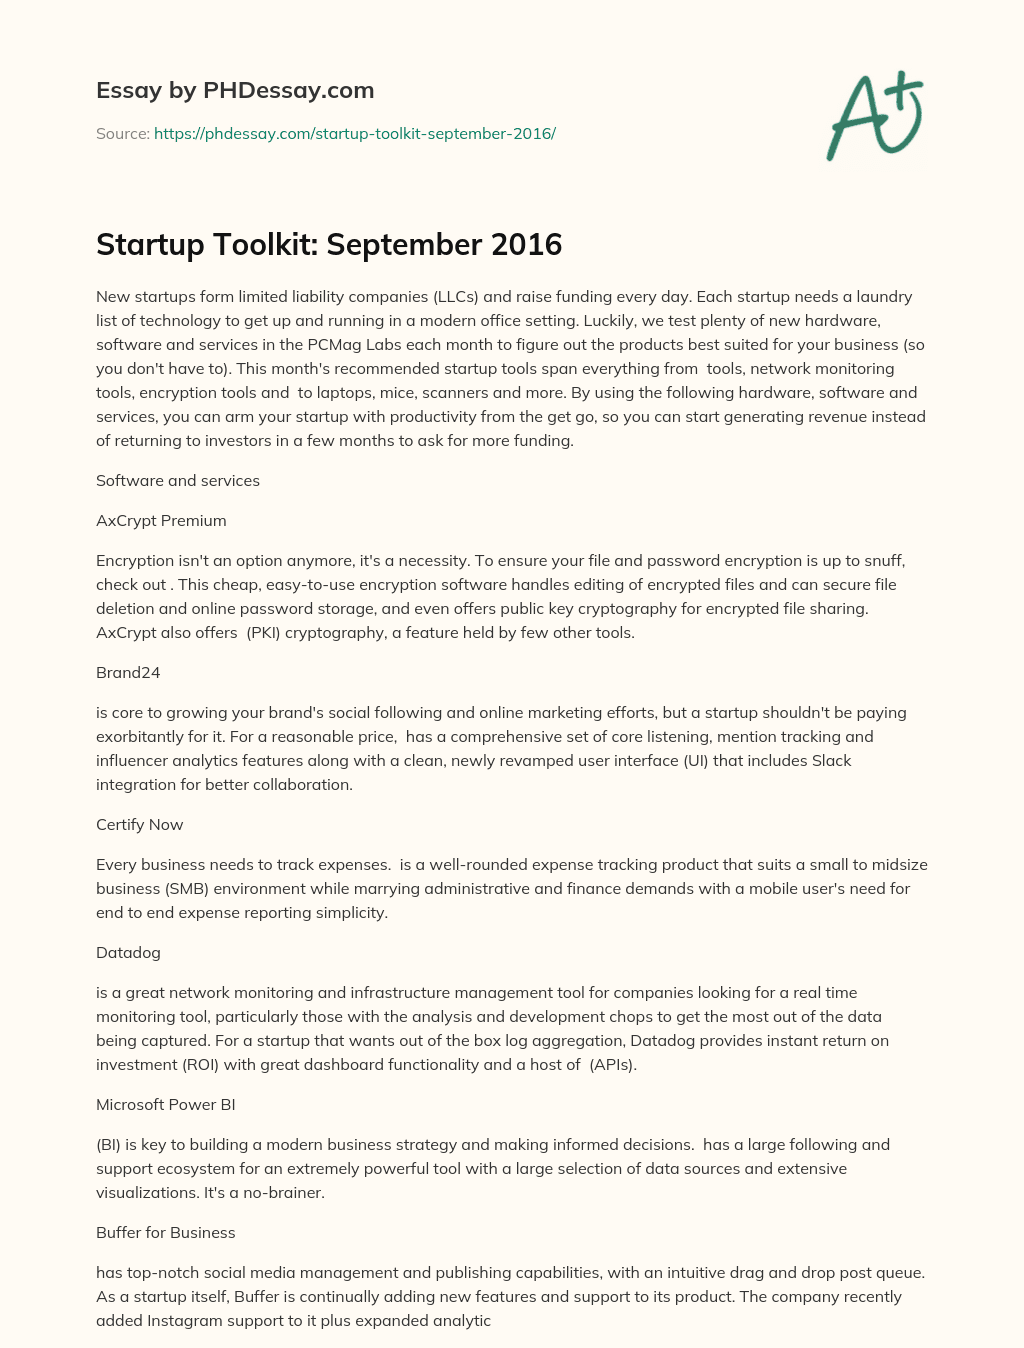 Startup Toolkit: September 2016 essay